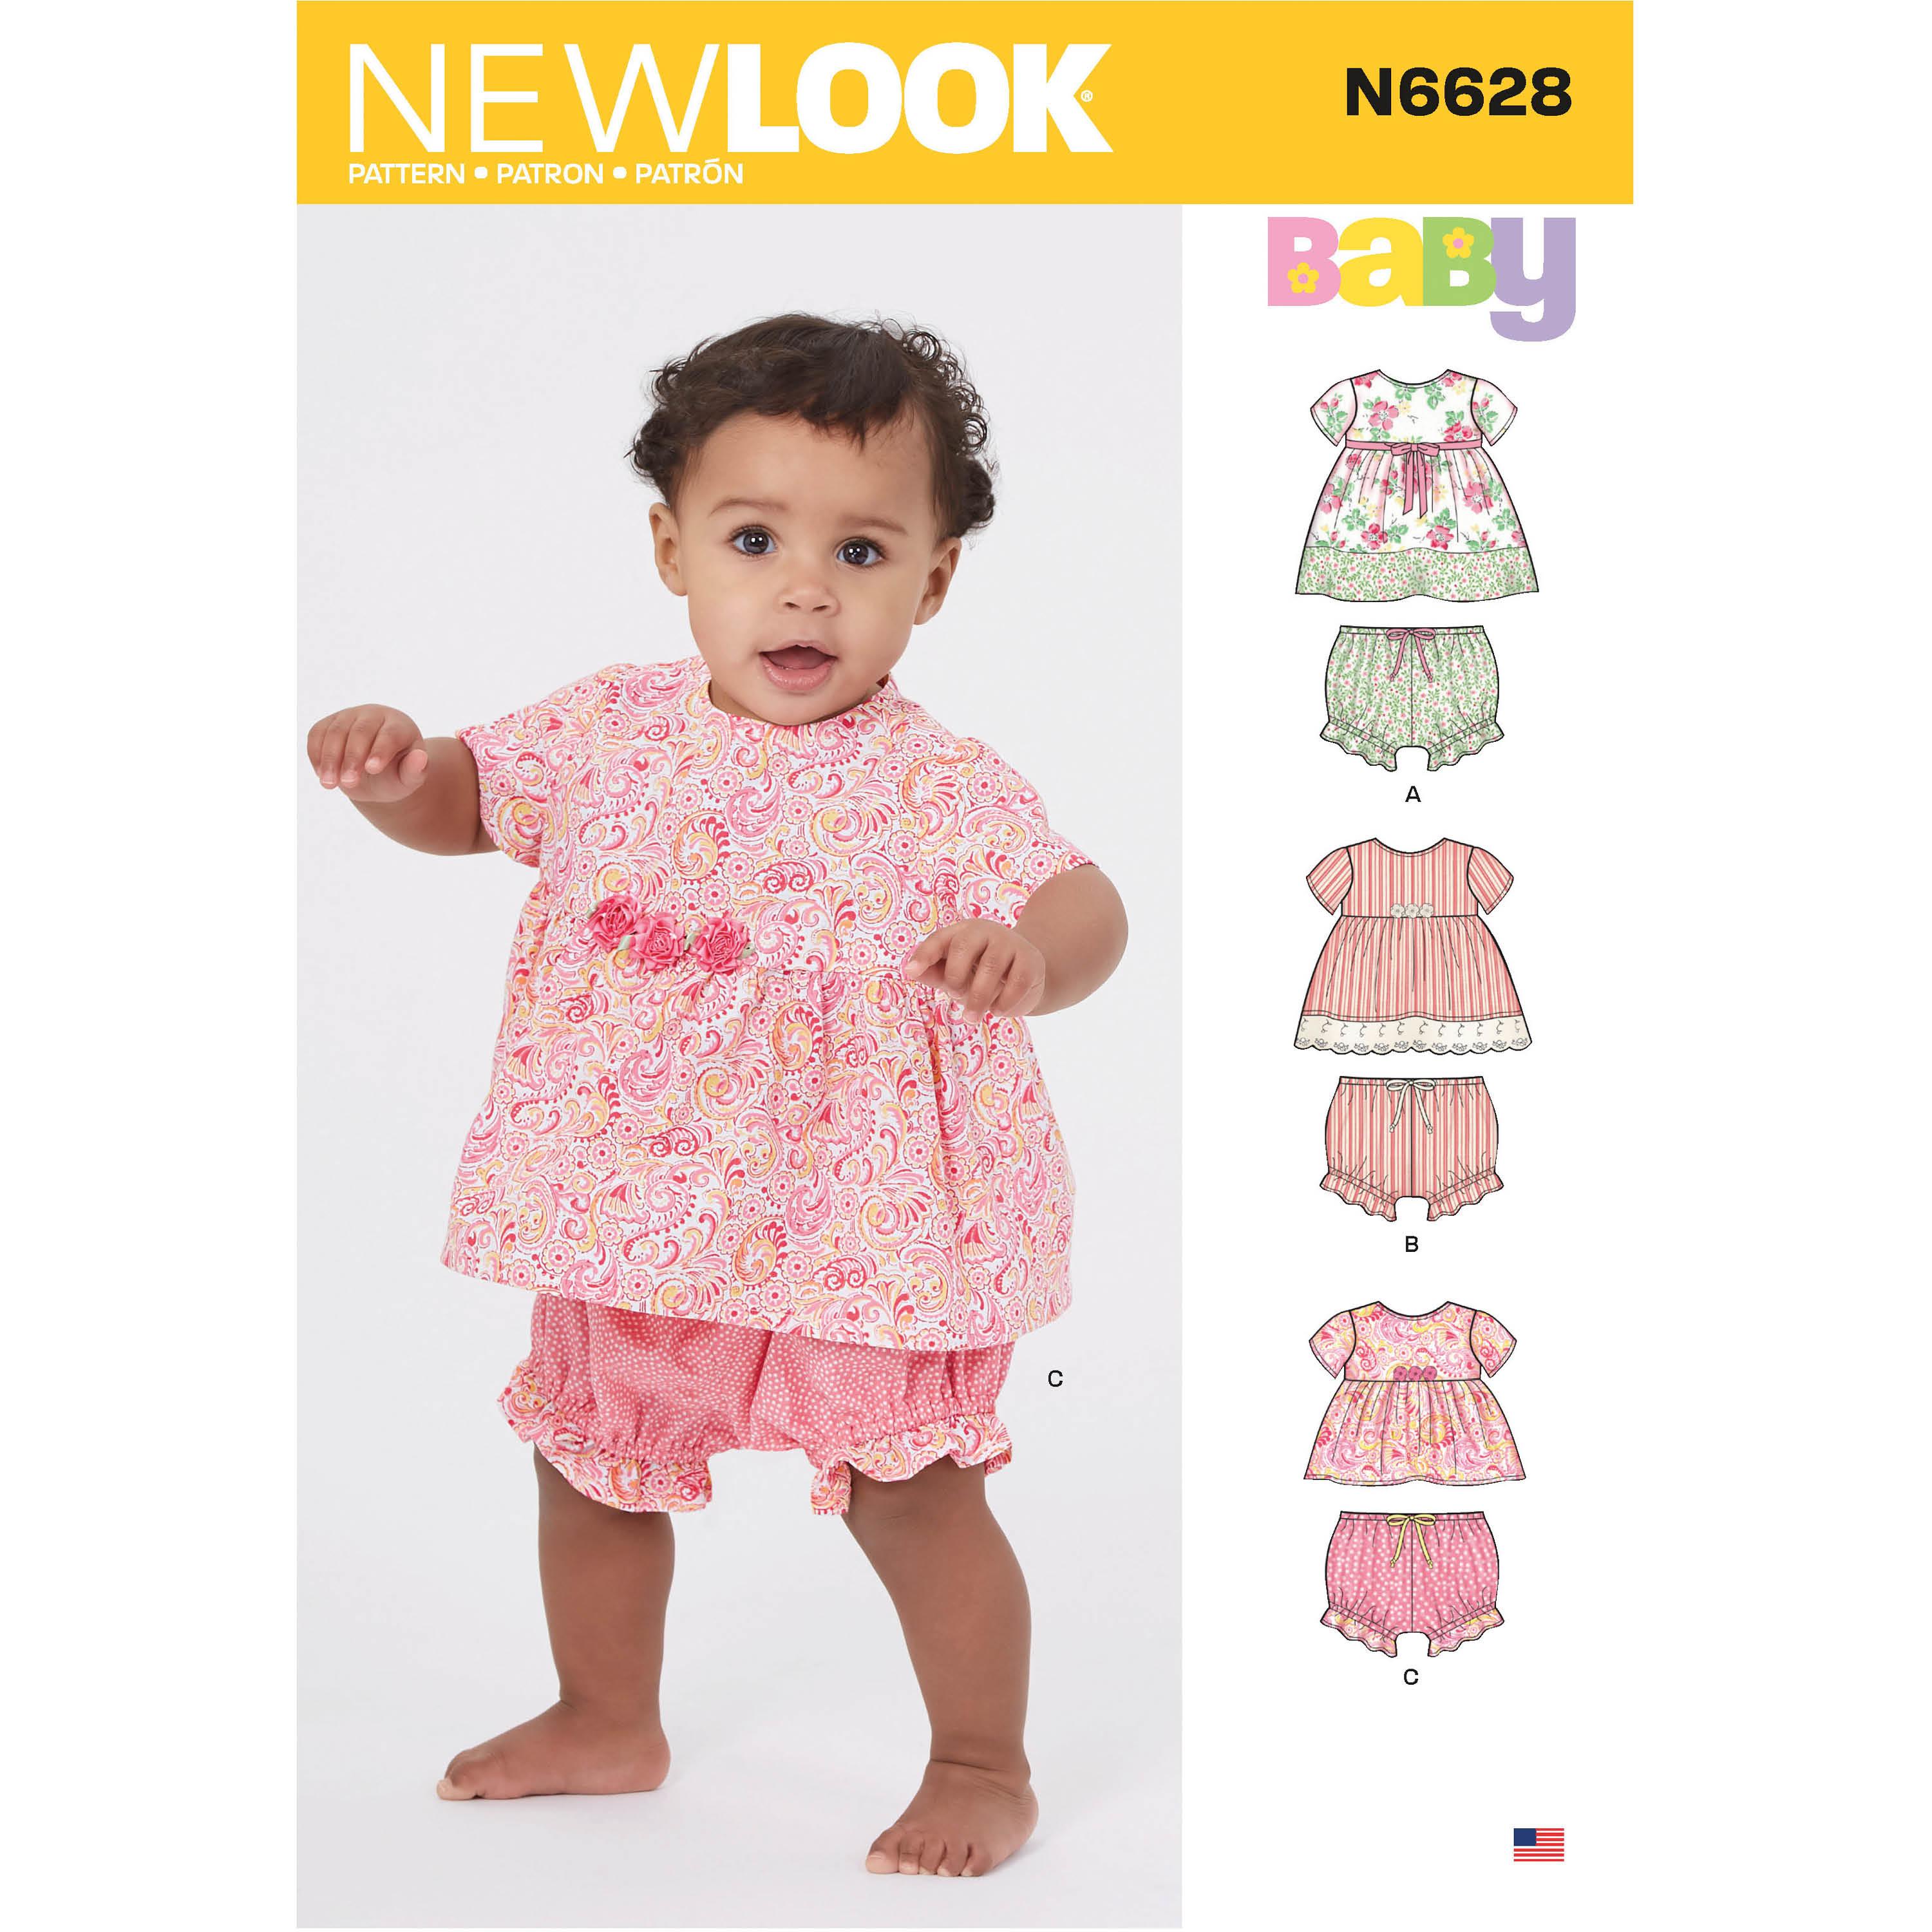 NewLook Sewing Pattern N6628 Babies' Sportswear